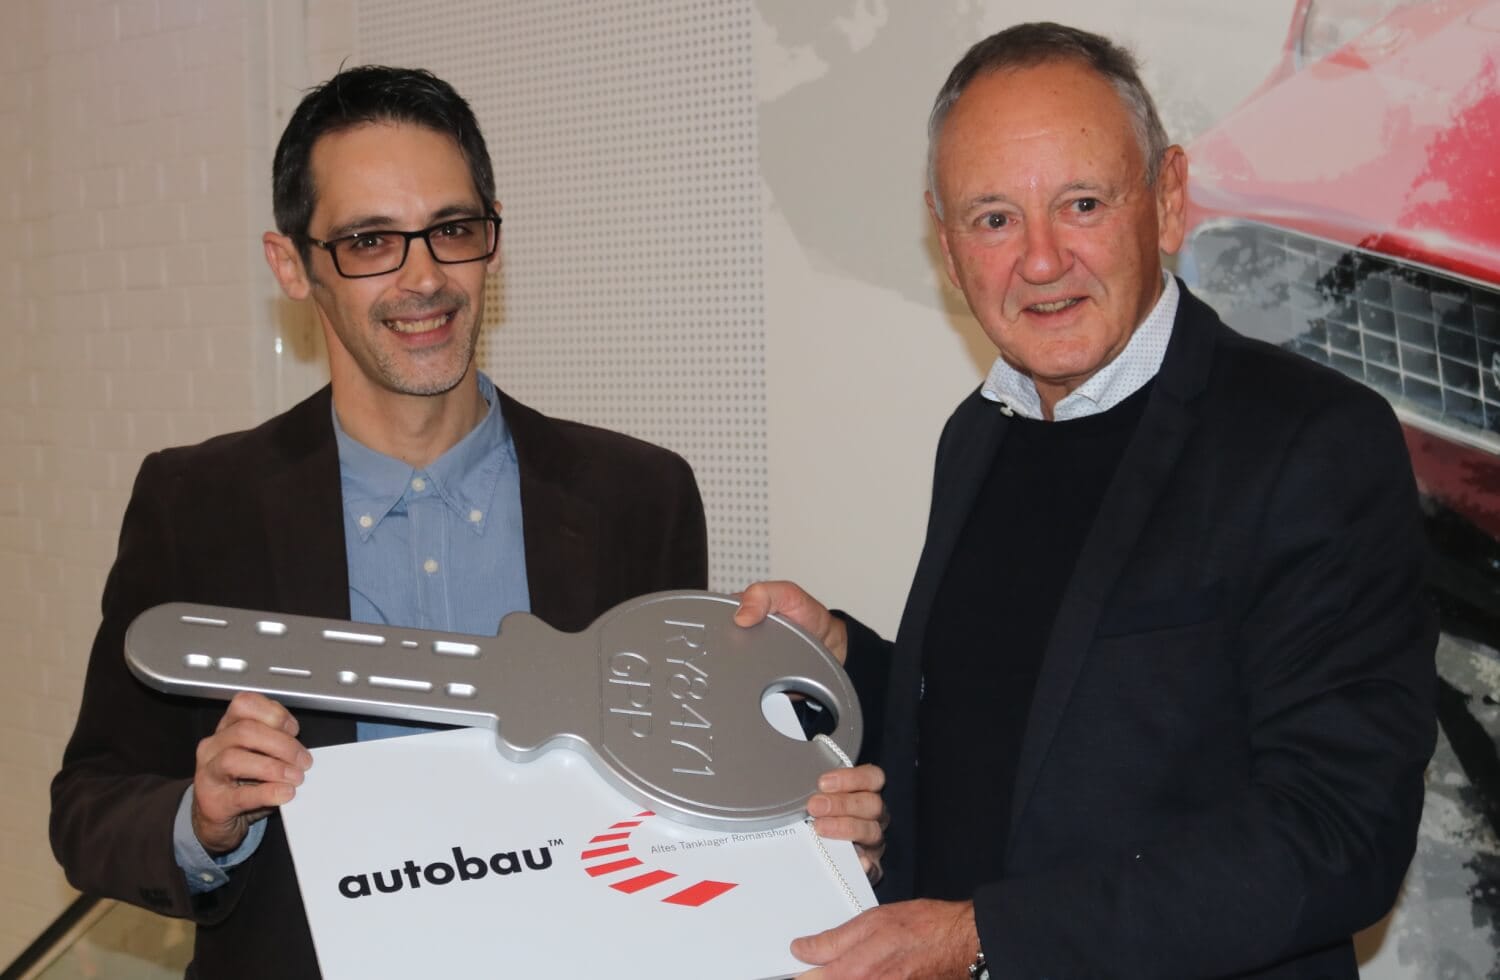 autobau Romanshorn: Handover of keys from Fredy Lienhard to son Fredy Alexander Lienhard